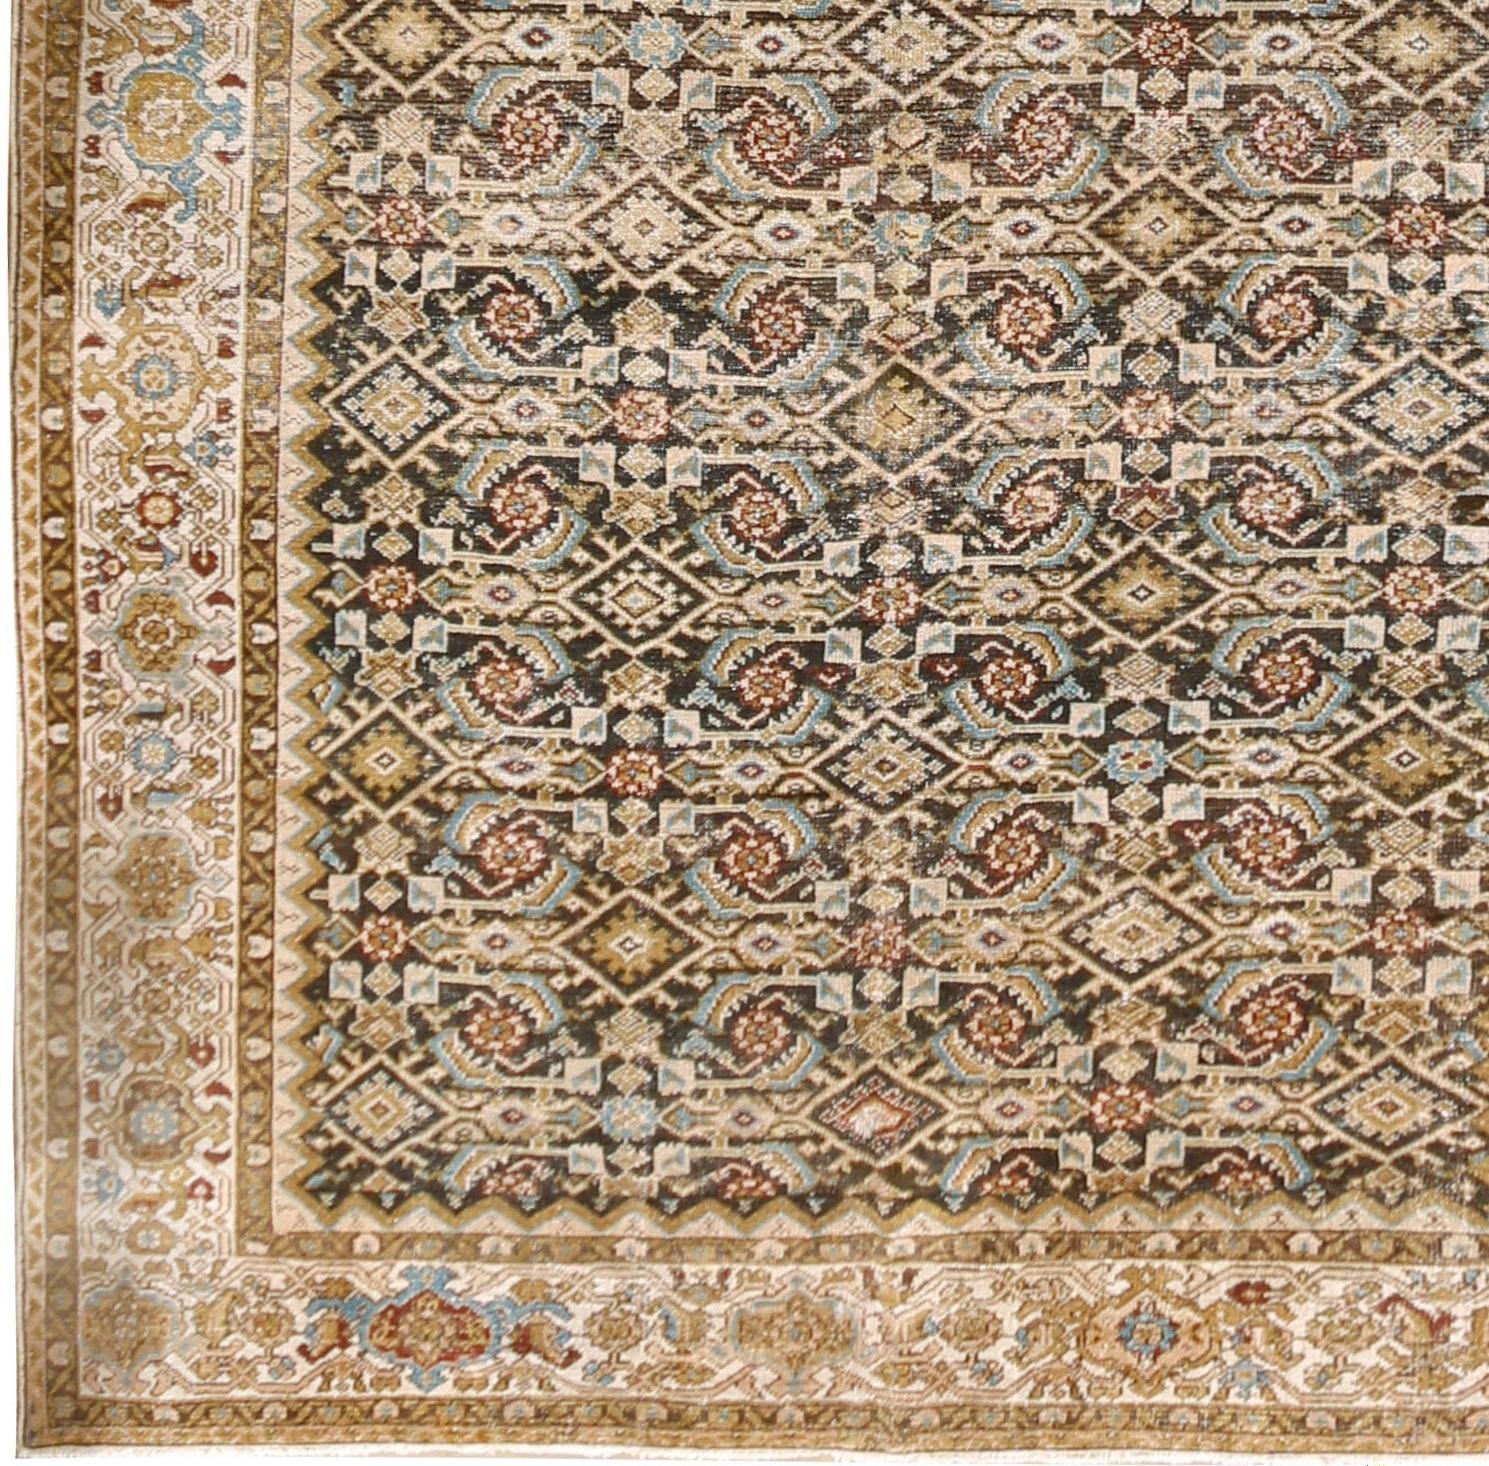 19th Century Antique Persian Malayer Corridor Carpet Rug, 7'1 x 17'11 For Sale